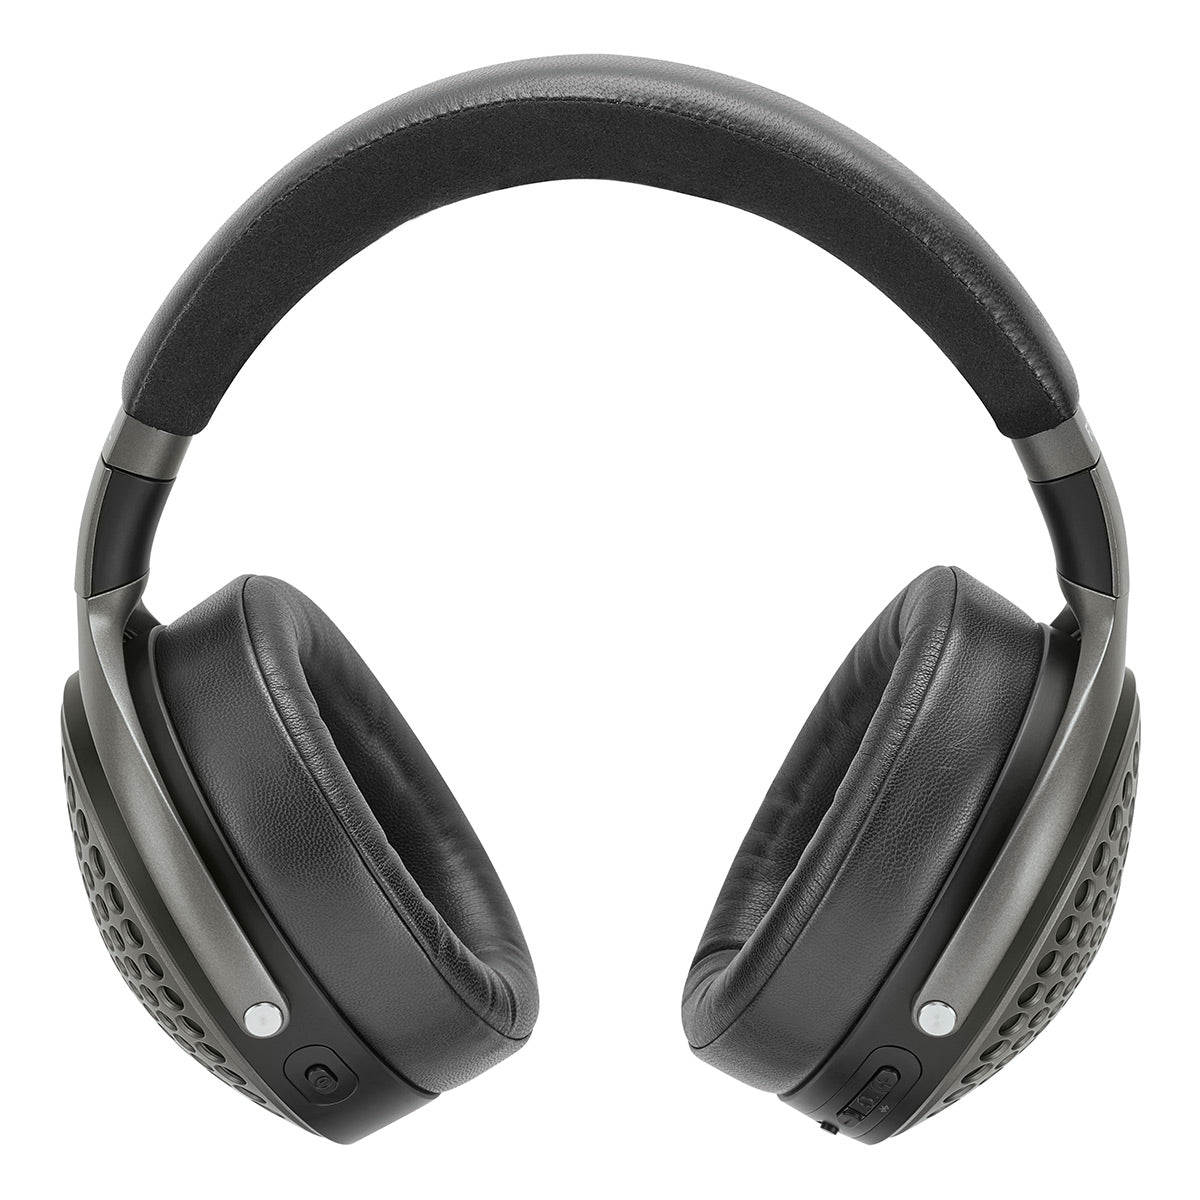 Focal Bathys Hi-Fi Bluetooth & ANC Headphones: Early Impressions